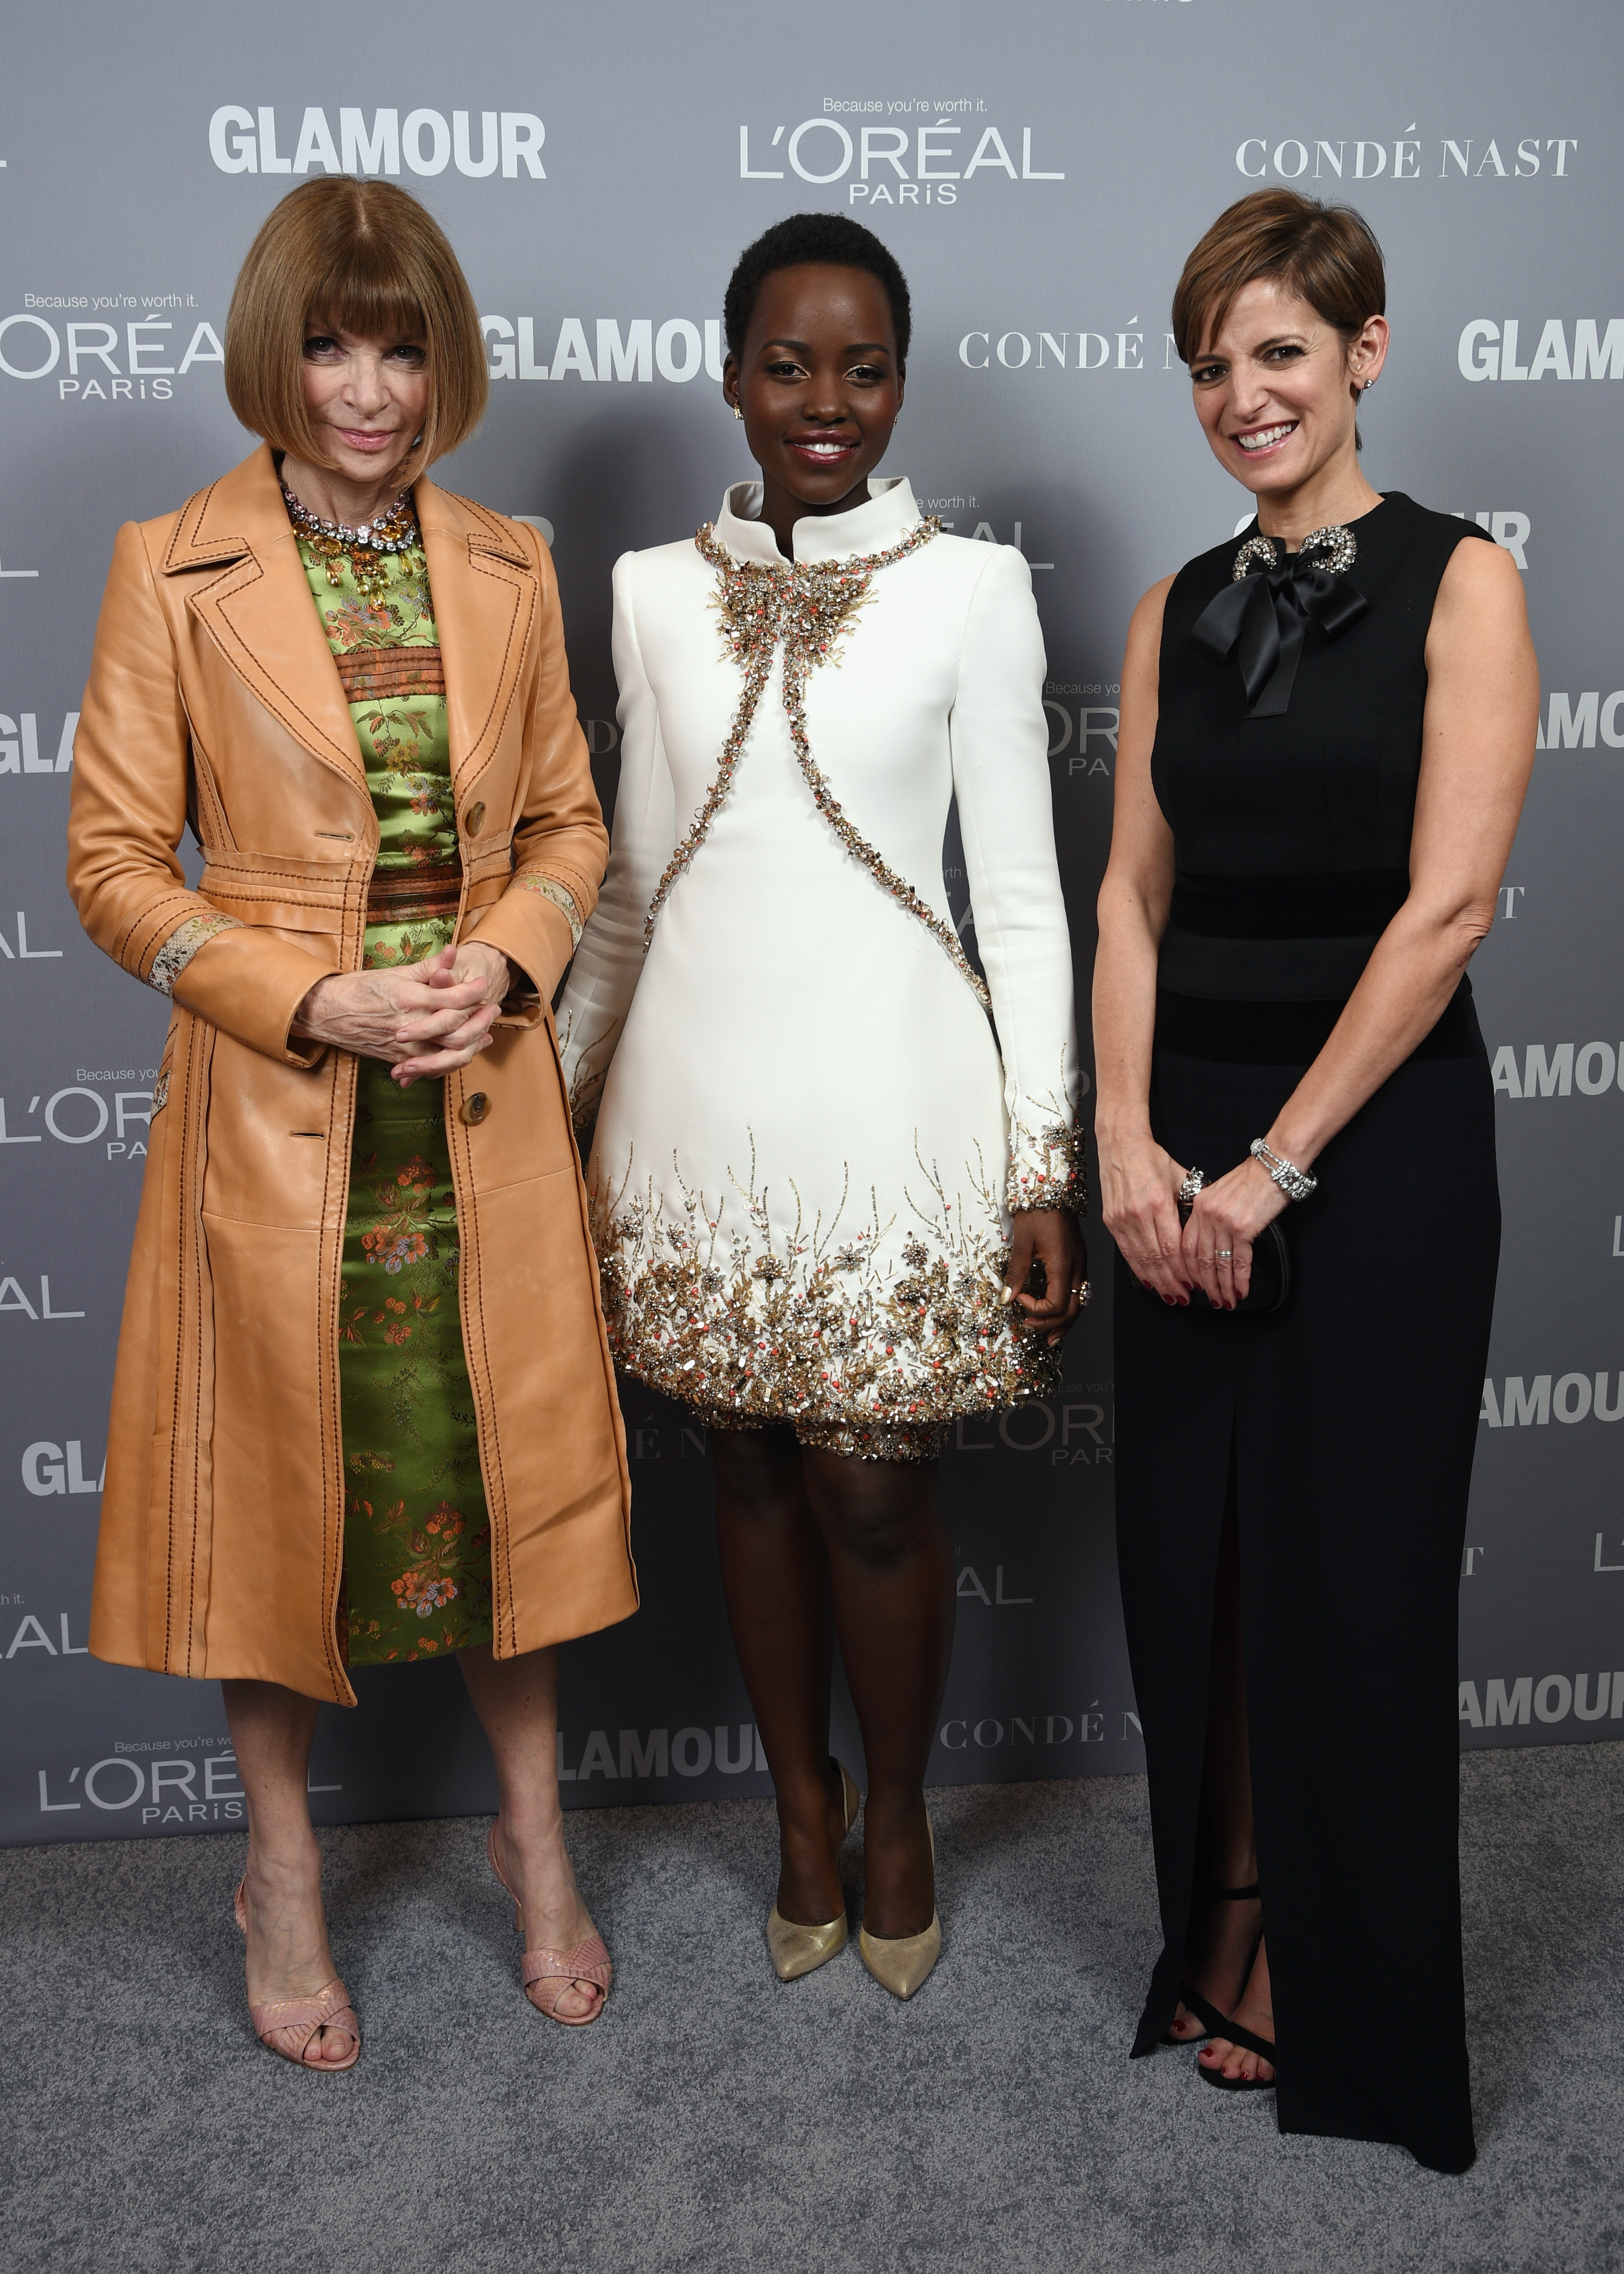 Анна Винтур (Vogue), Лупита Нионго и Синтия Лиф (Glamour) 